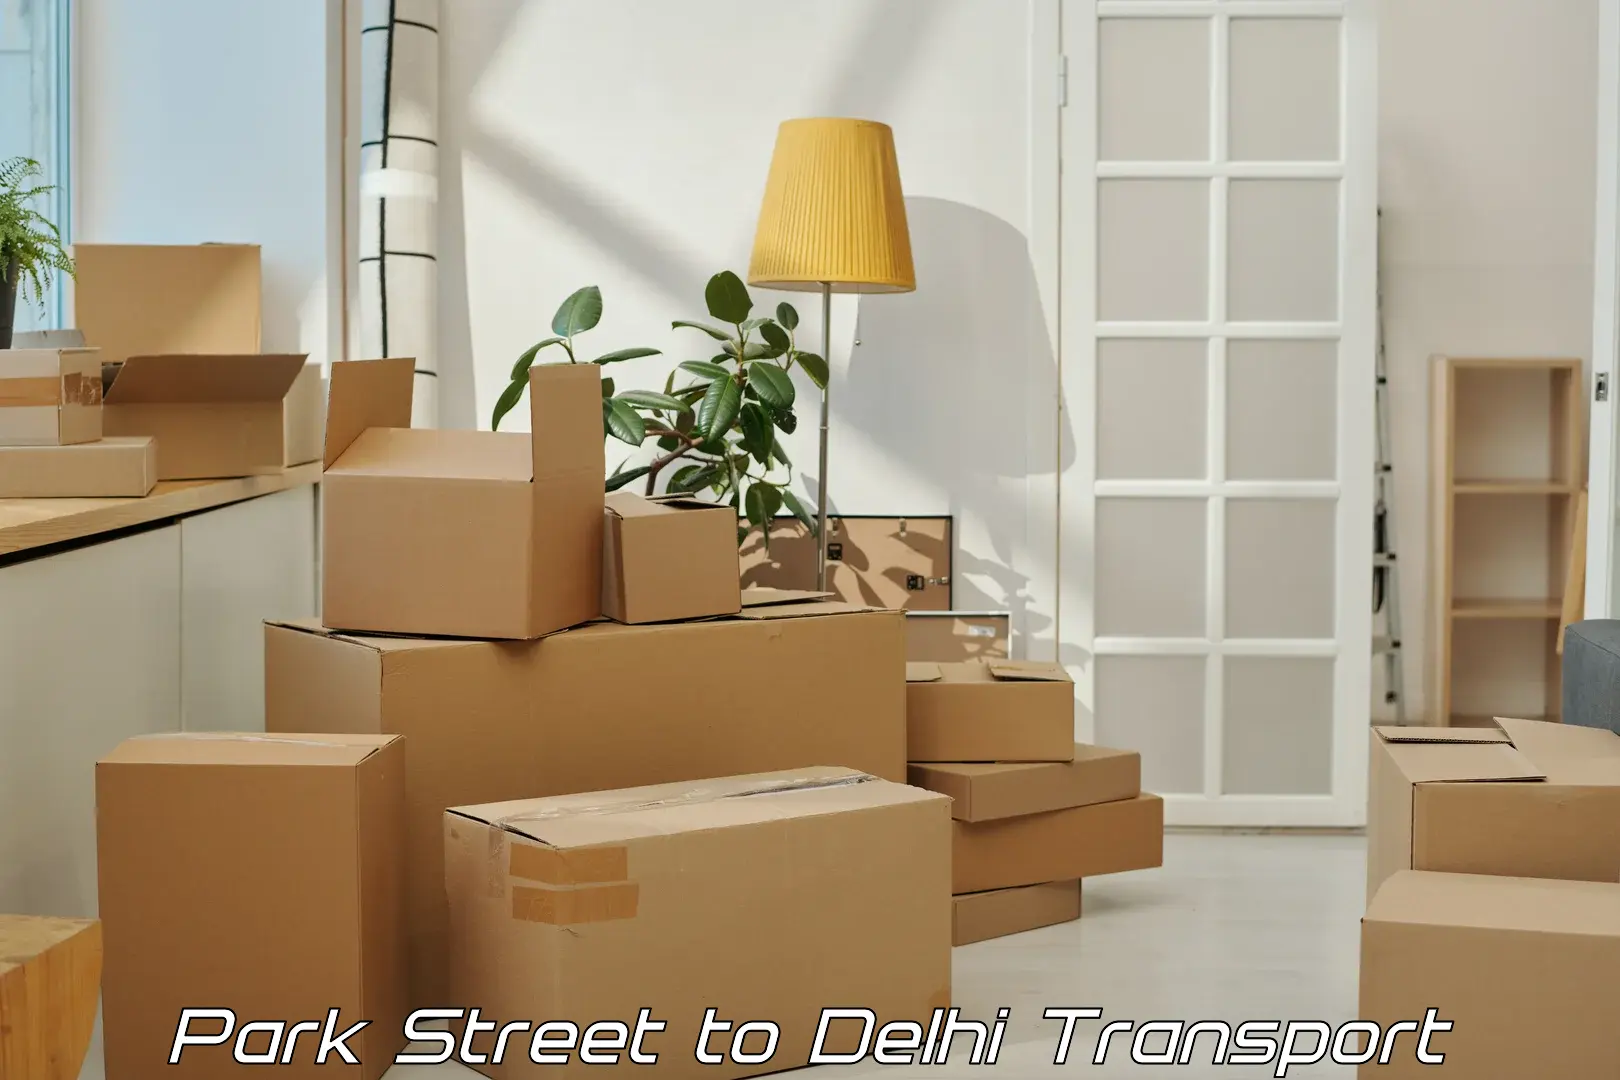 Daily transport service Park Street to University of Delhi